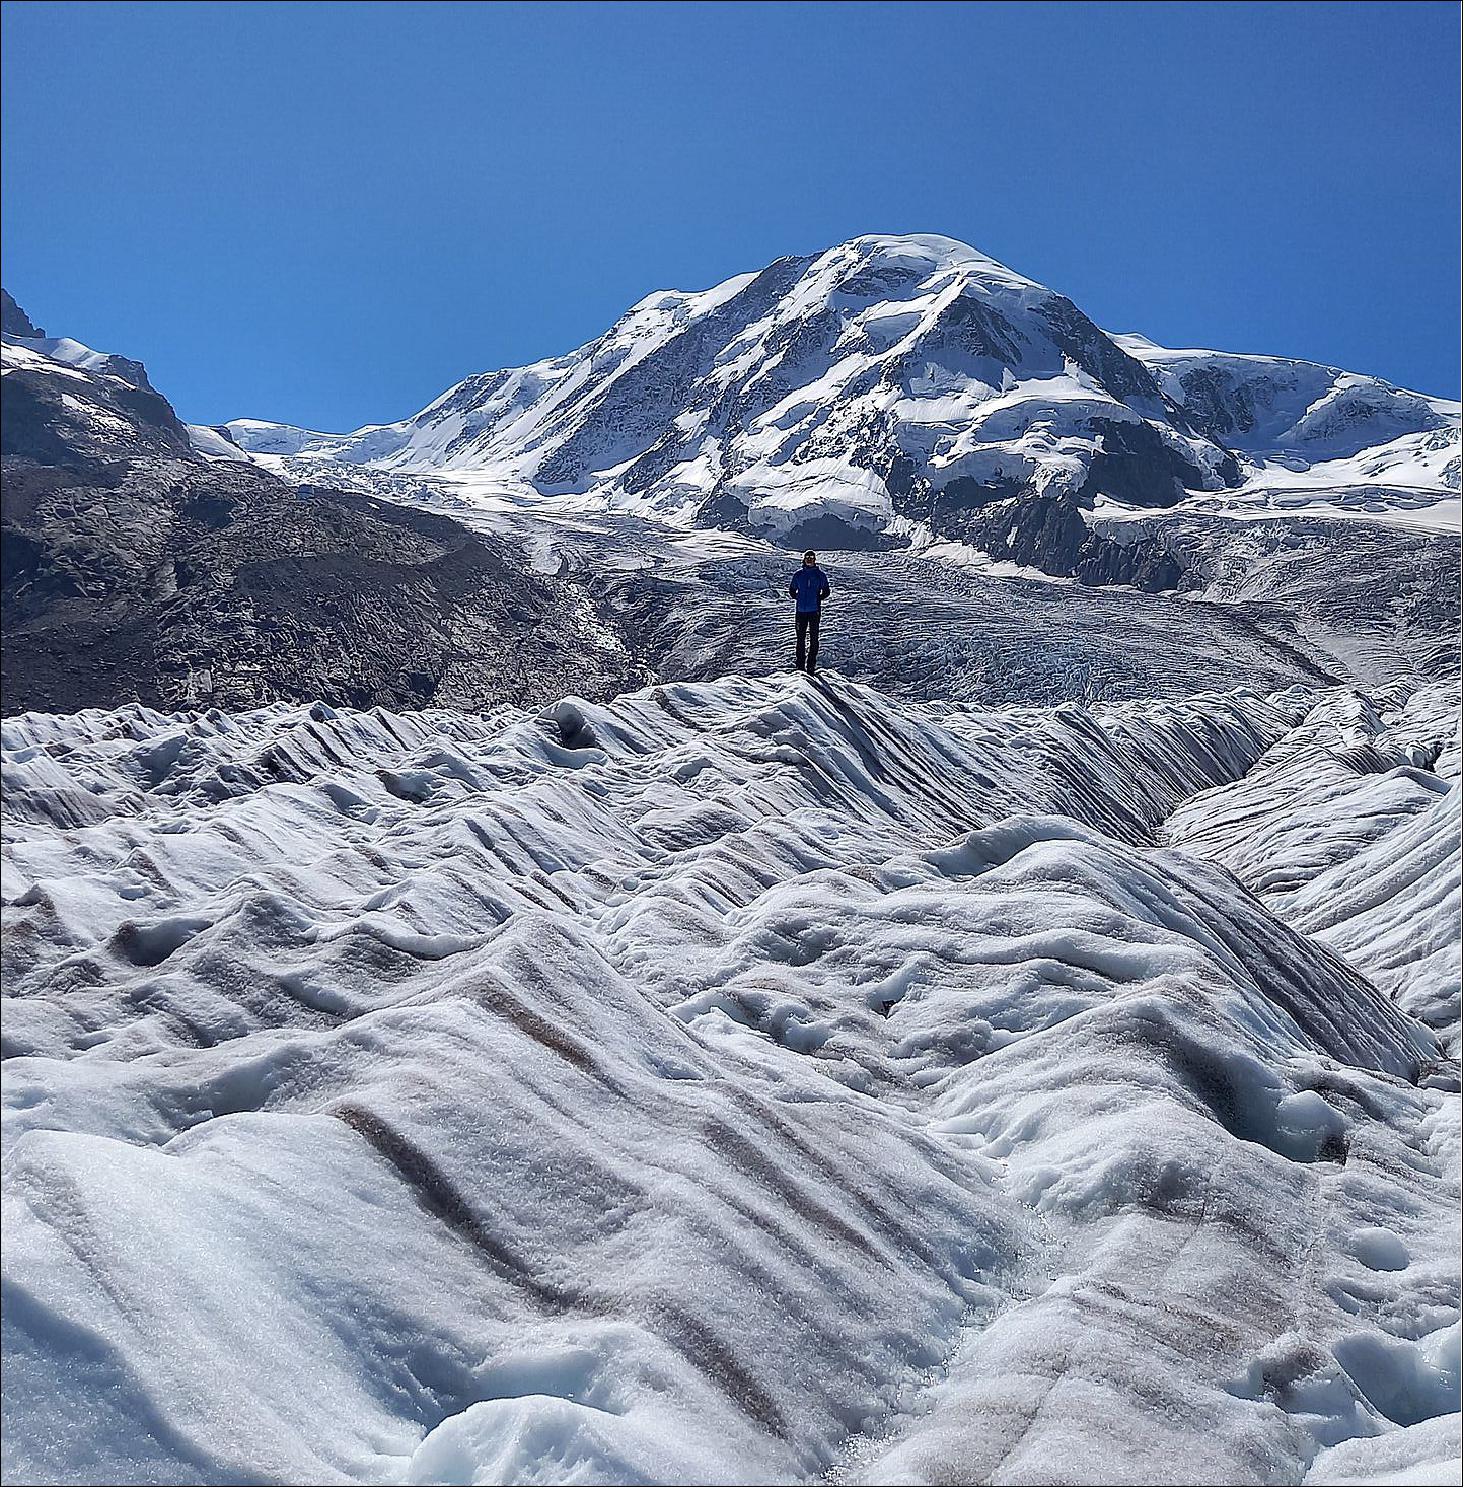 Figure 4: ESA Expedition to the Gorner Glacier in August 2021 (image credit: ESA)